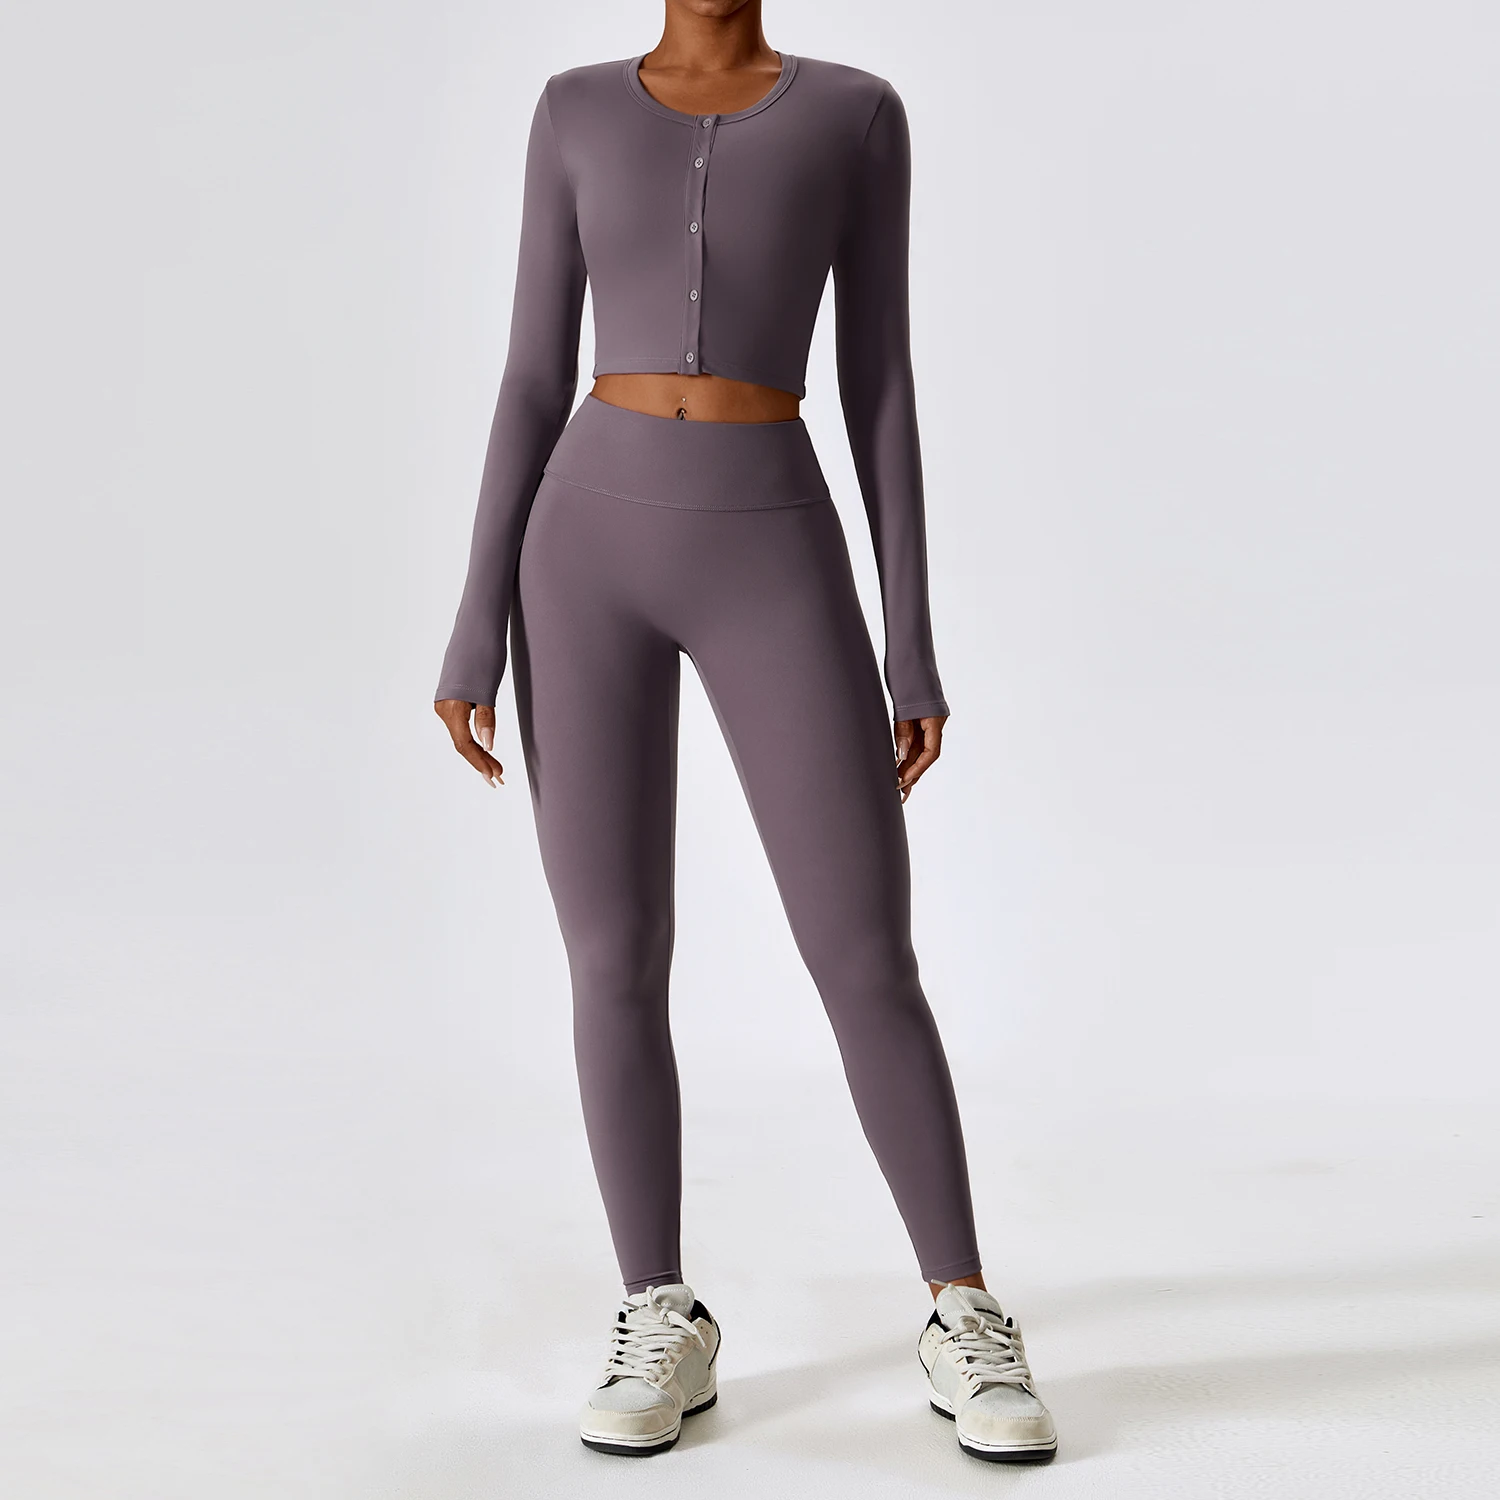 

Ropa Deportiva mujer Sports Jacket Fit Gym Cloths Fitness Yoga Wear Outdoor Jogging Sportswear set